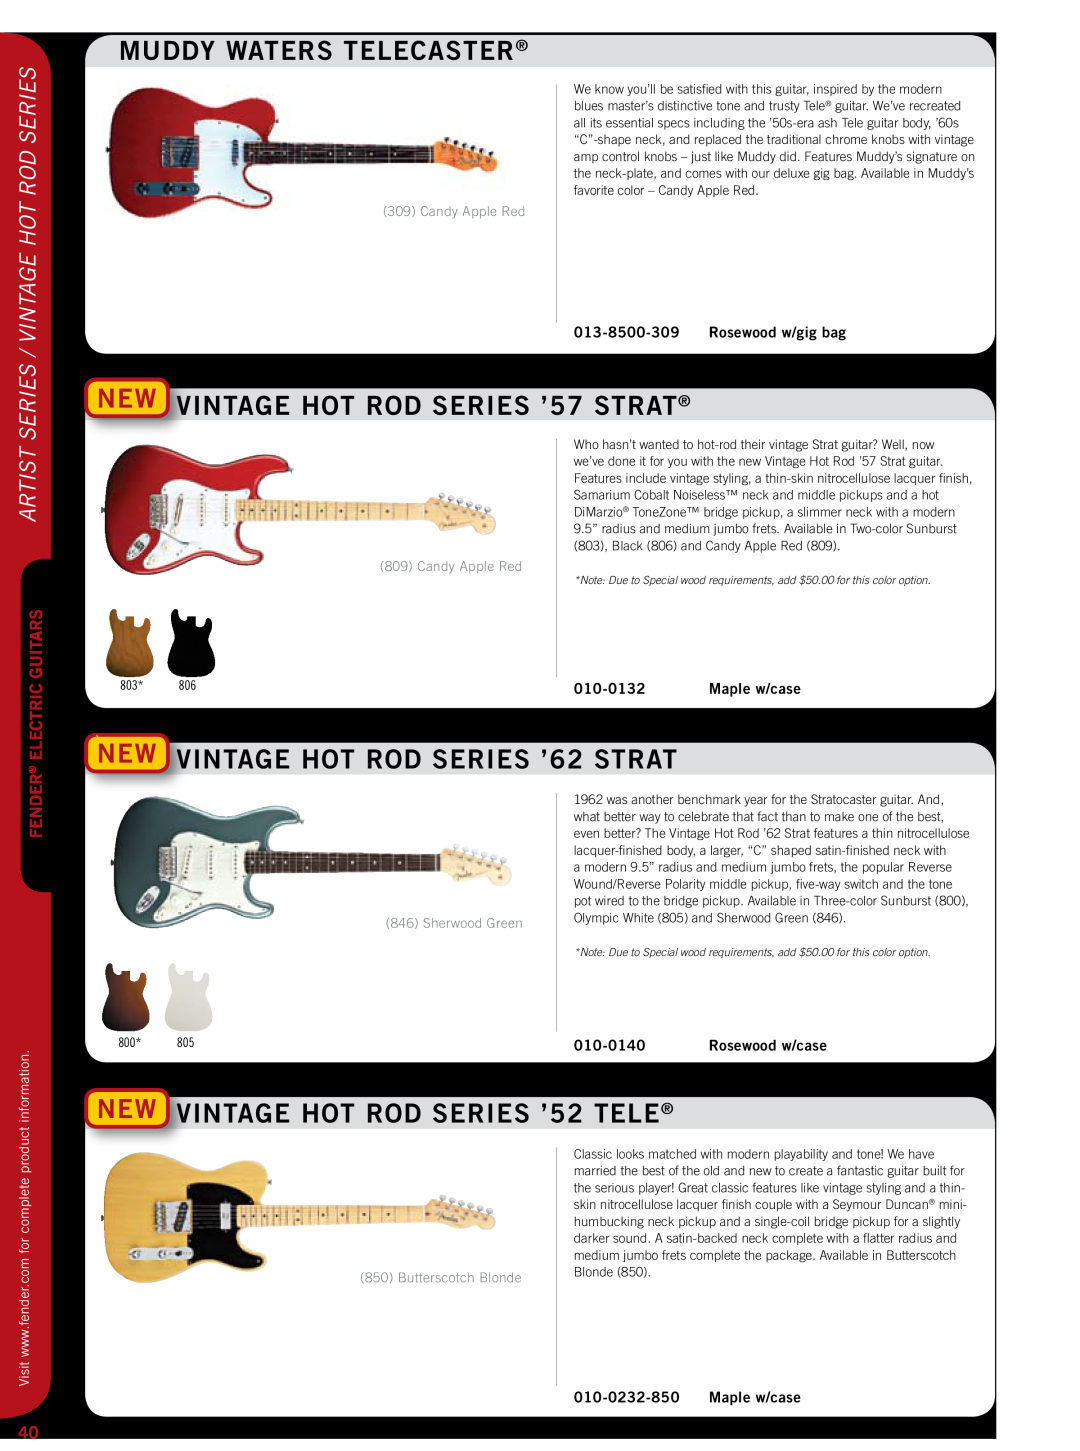 Fender 011-7602 Muddy Waters Telecaster, new VINTAGE HOT ROD SERIES ’57 STRAT, new VINTAGE HOT ROD SERIES ’62 STRAT 